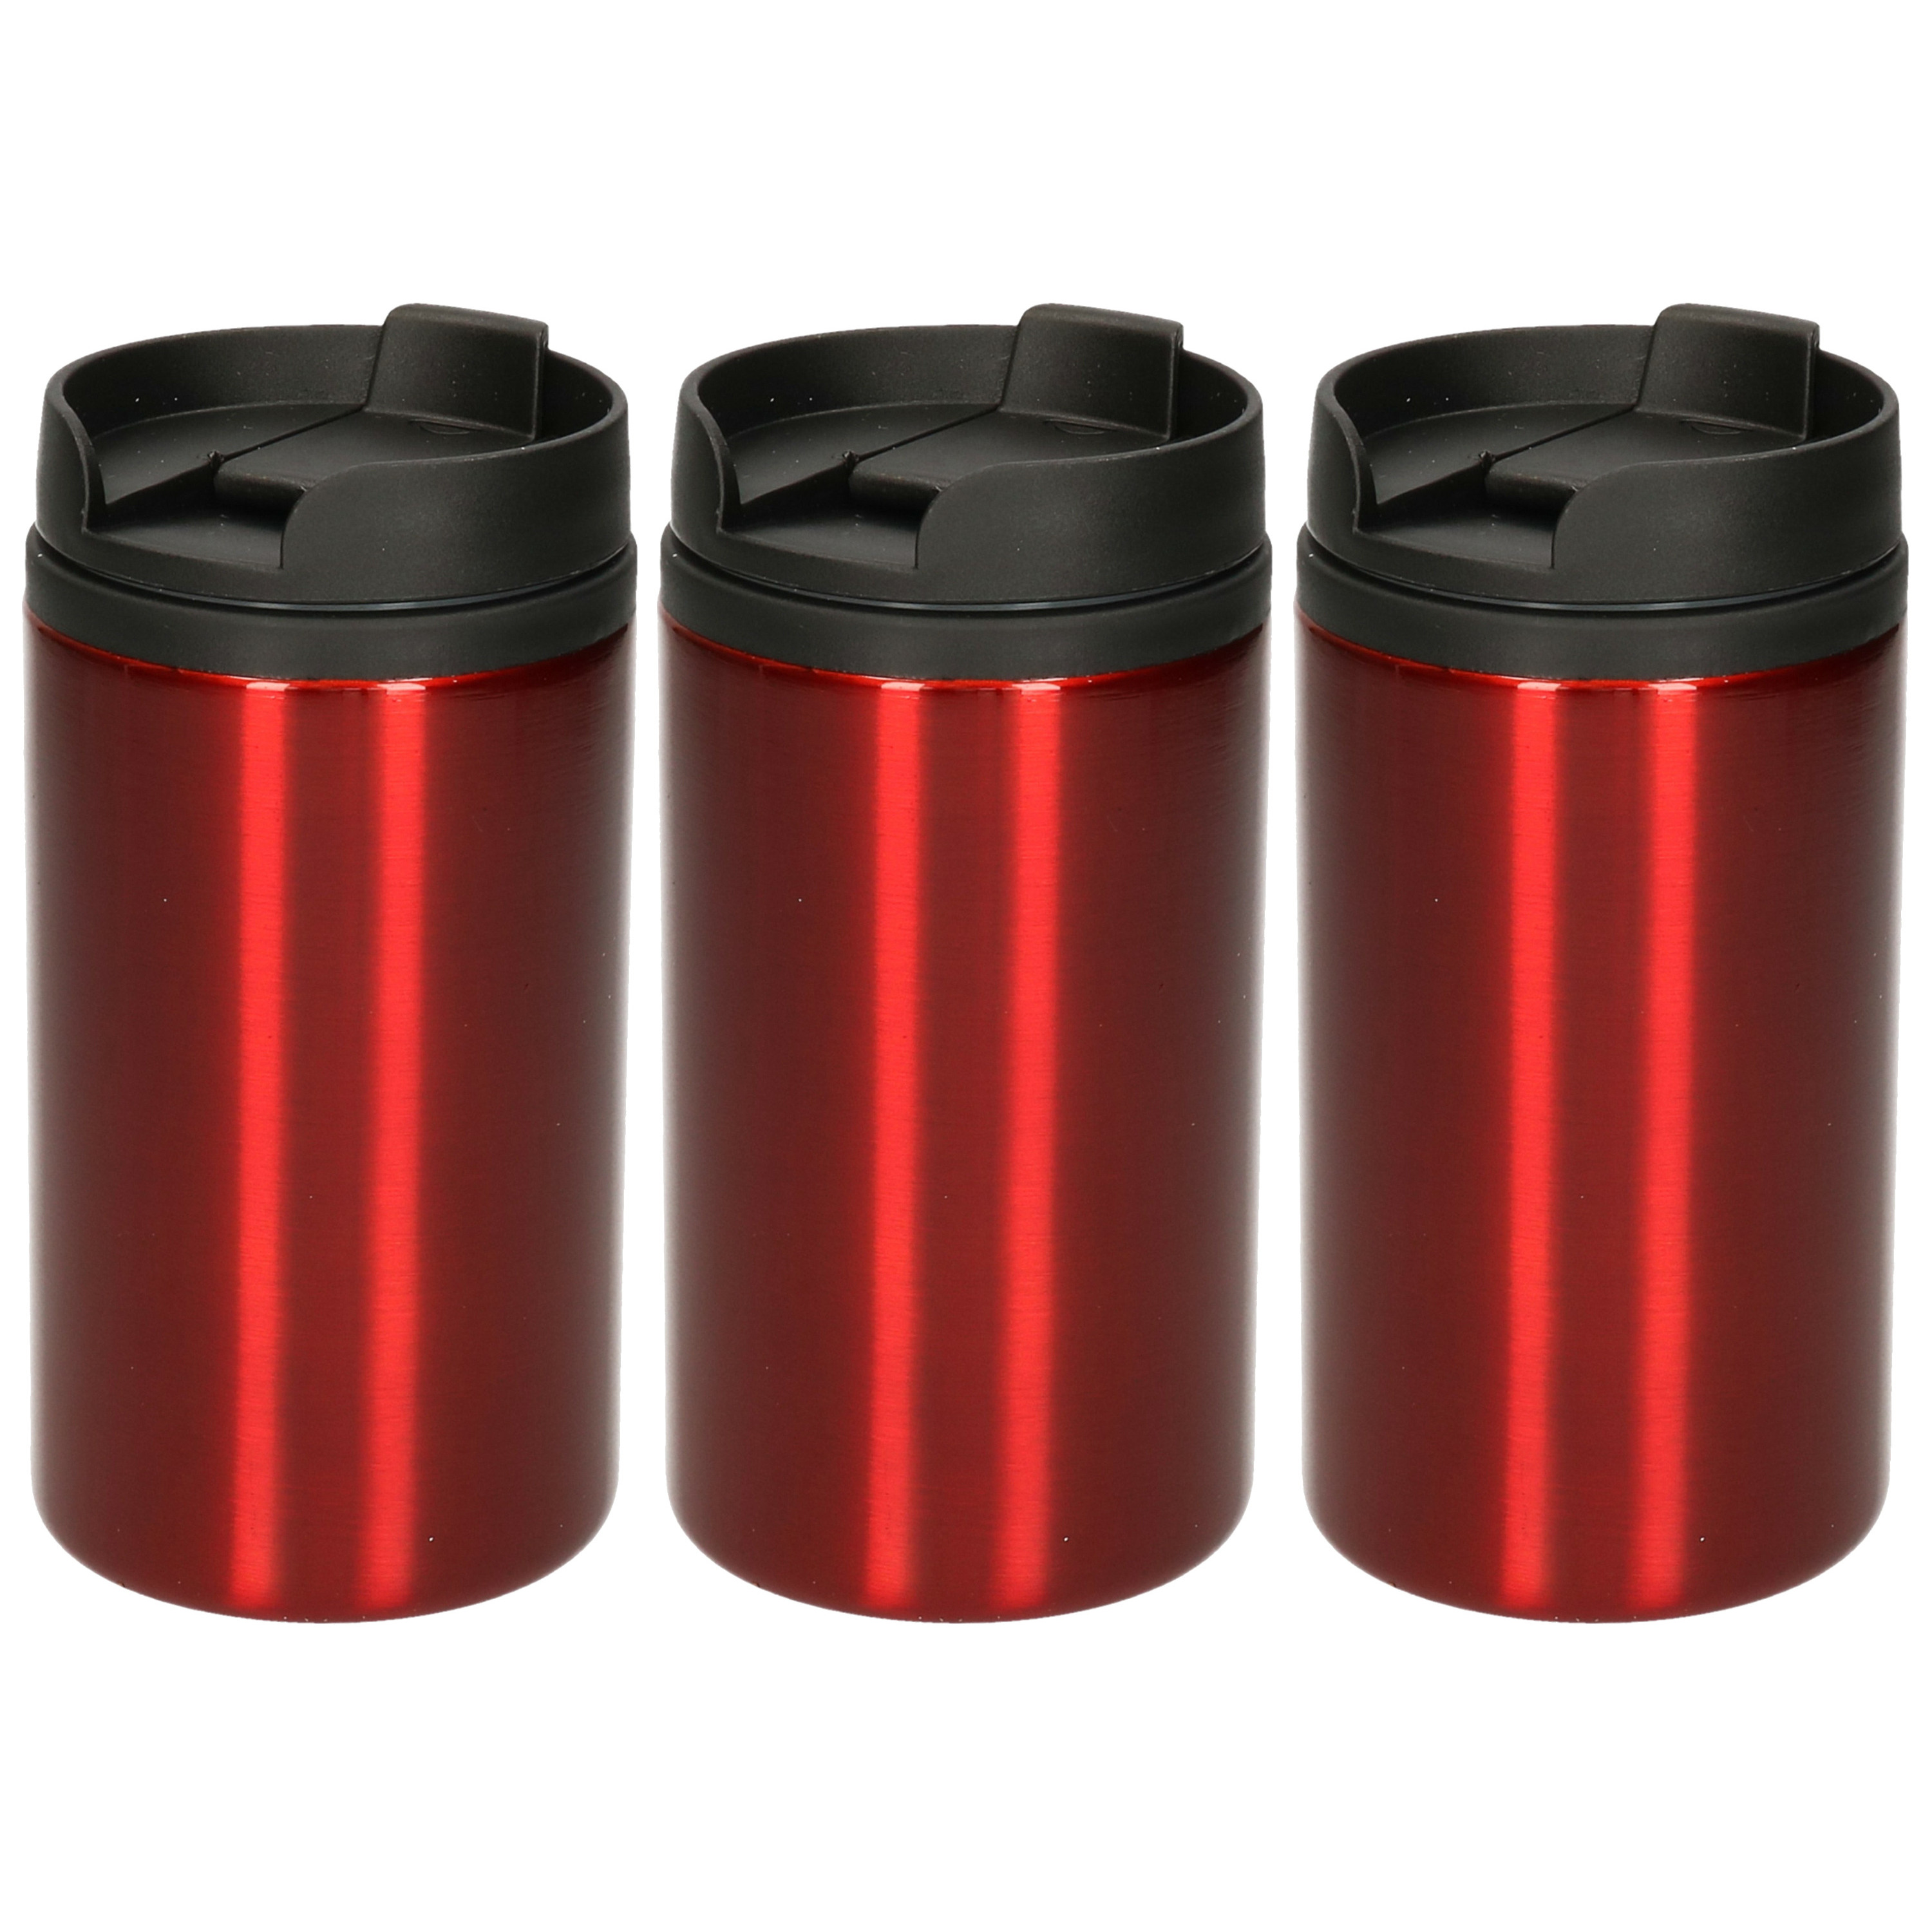 3x Warmhoudbekers metallic-warm houd bekers rood 320 ml